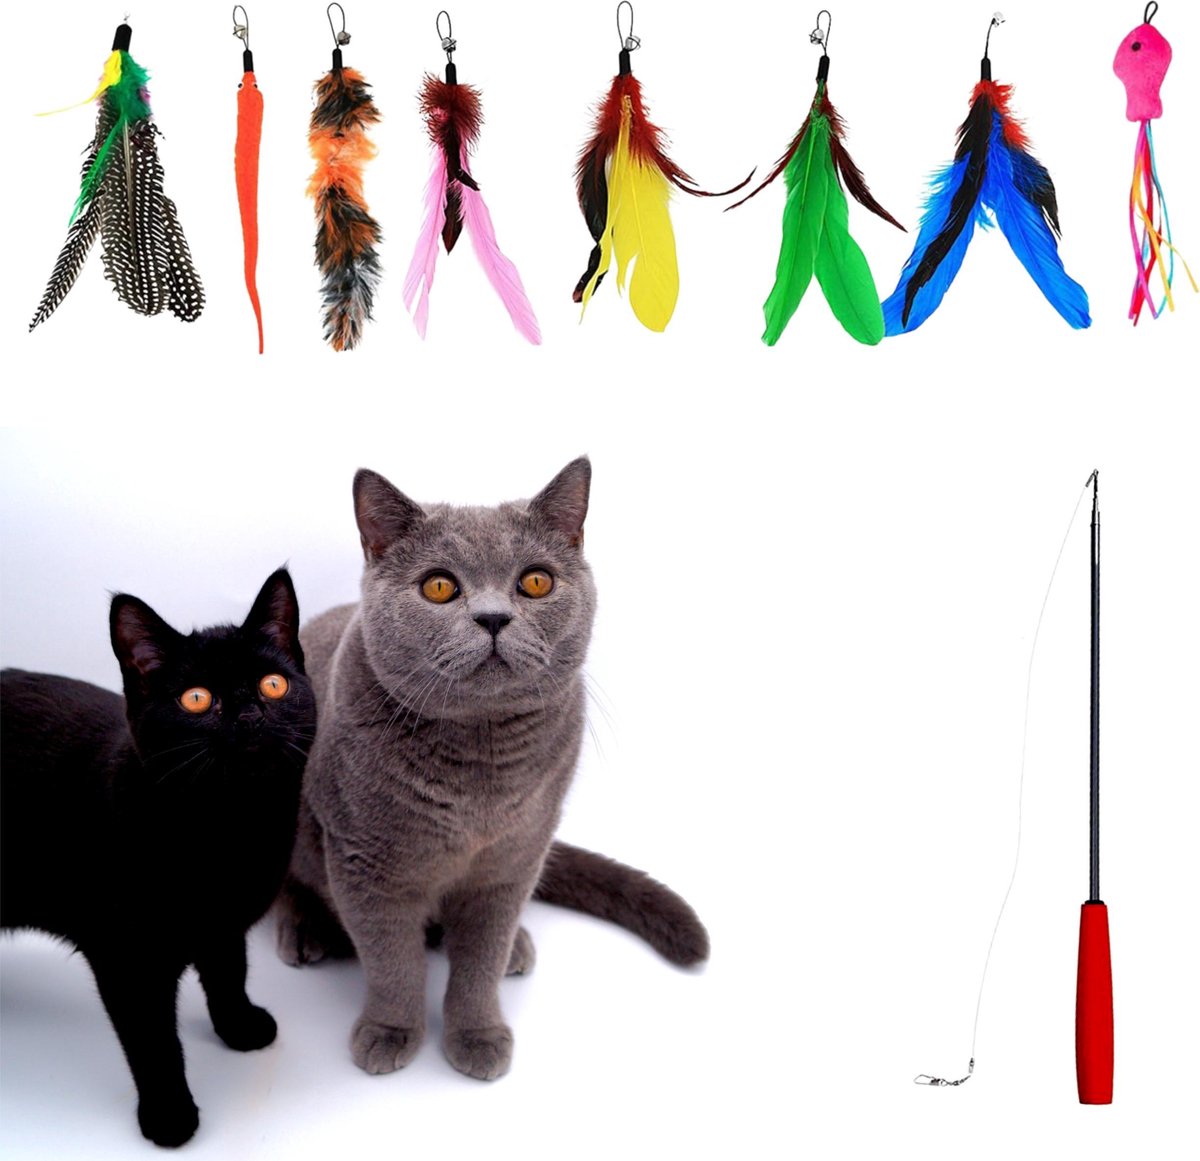 Make Me Purr Kattenhengel met 8 Hangers - Speelgoed Hengel voor Katten - Kat Speelhengel met Veren - Kitten Kattenplager met Veer - Kattenspeelgoed - Kattenspeeltjes - Make Me Purr